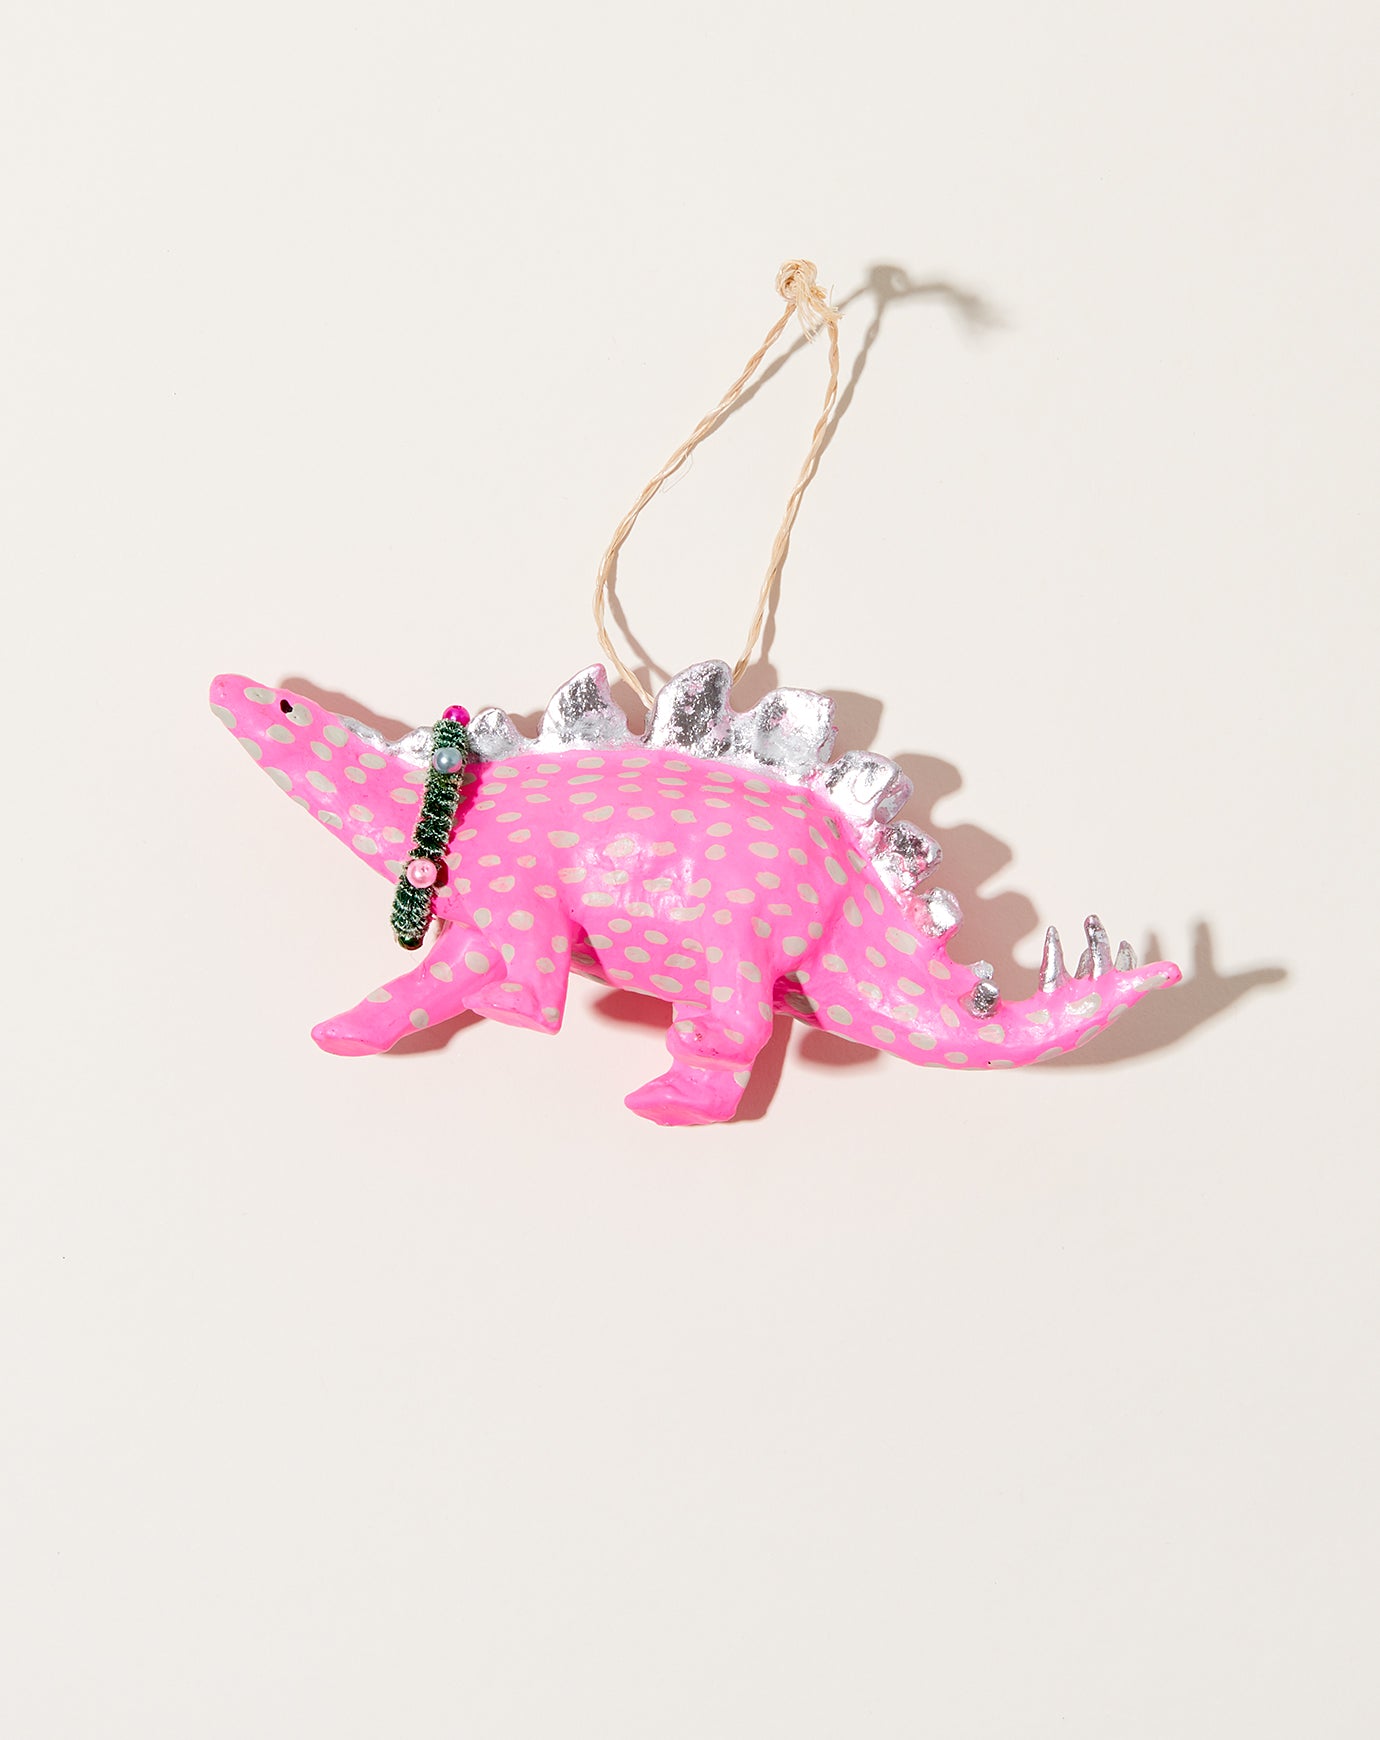 Cody Foster Merry Stegasaurus Ornament in Pink